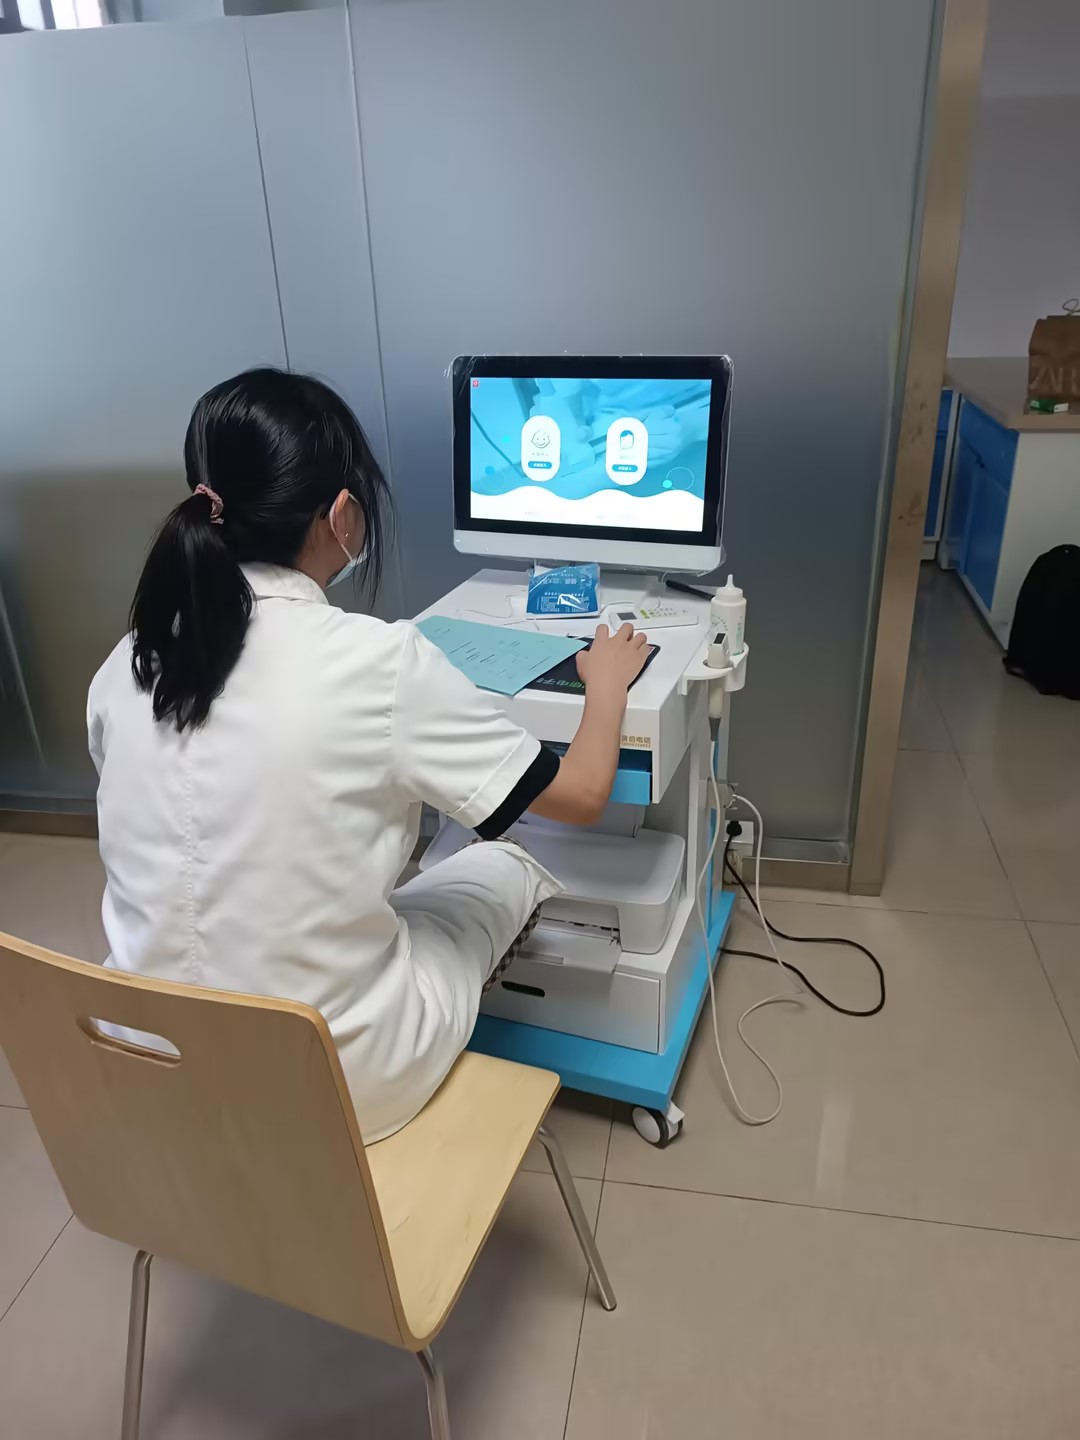 MQD-7000骨密度测试仪器在广东韶关新华街道沙洲民社区服务中心装机